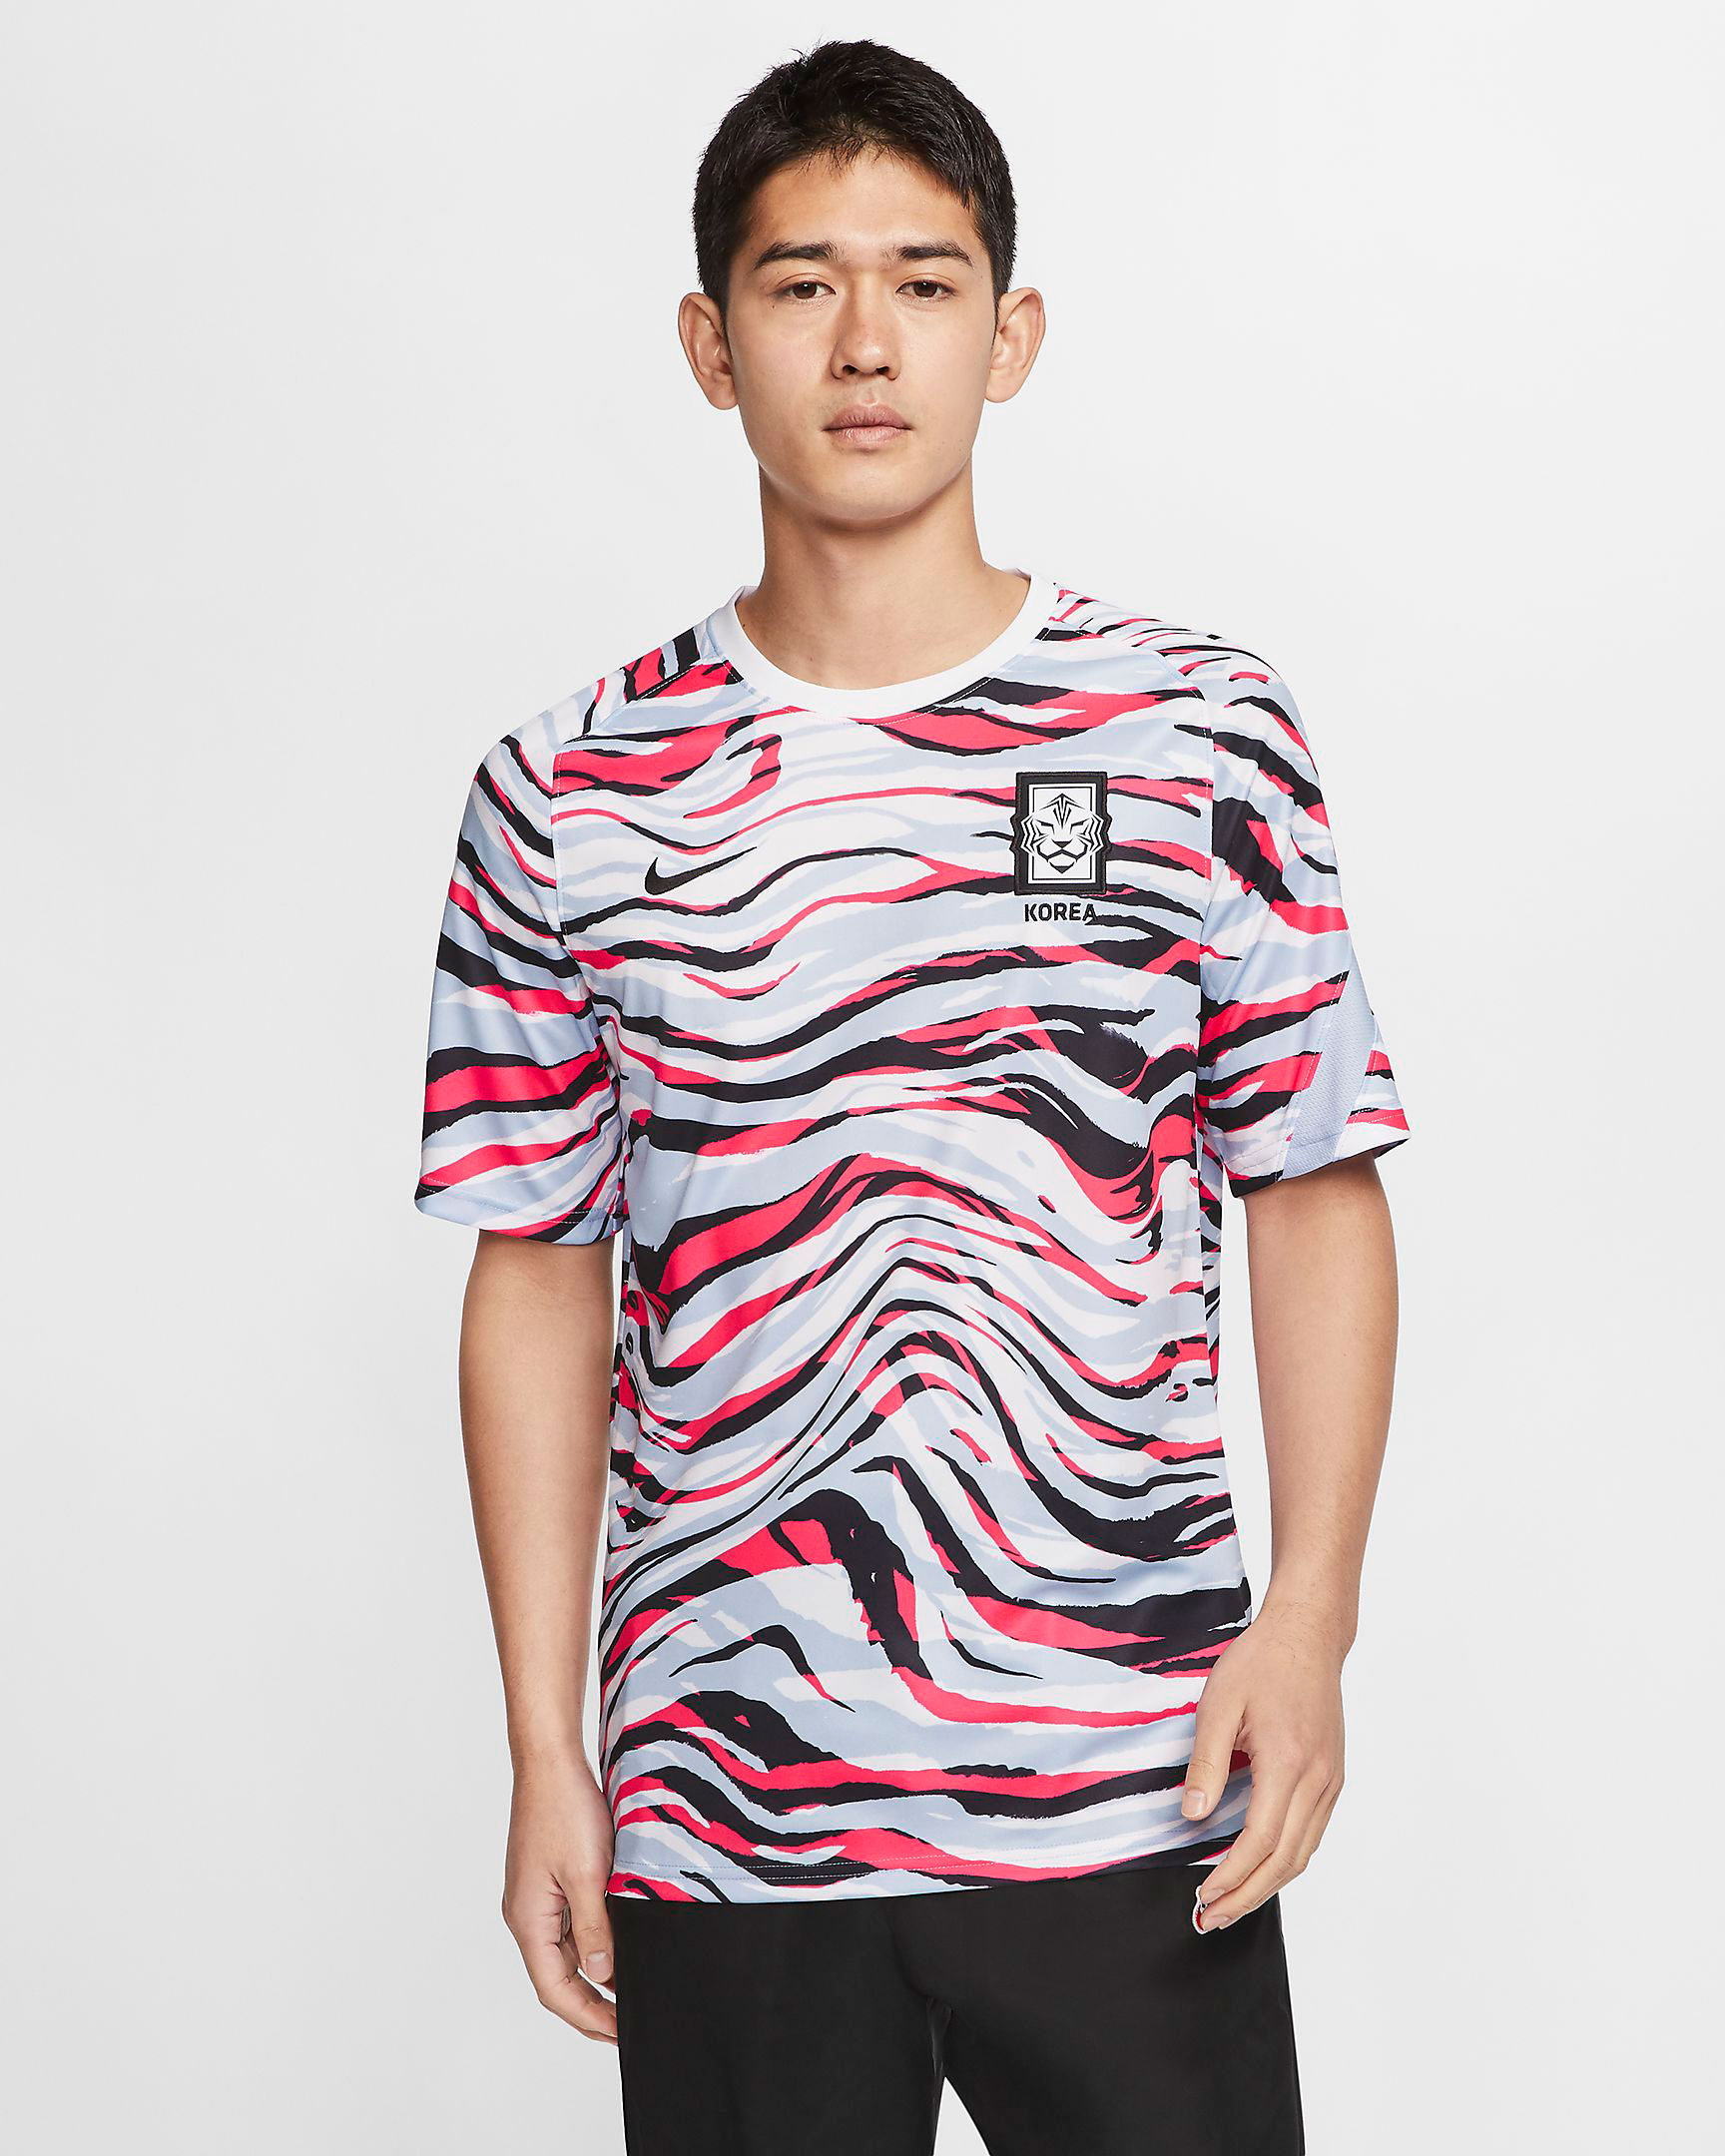 Nike Air Max 95 Korea Shirt Match 